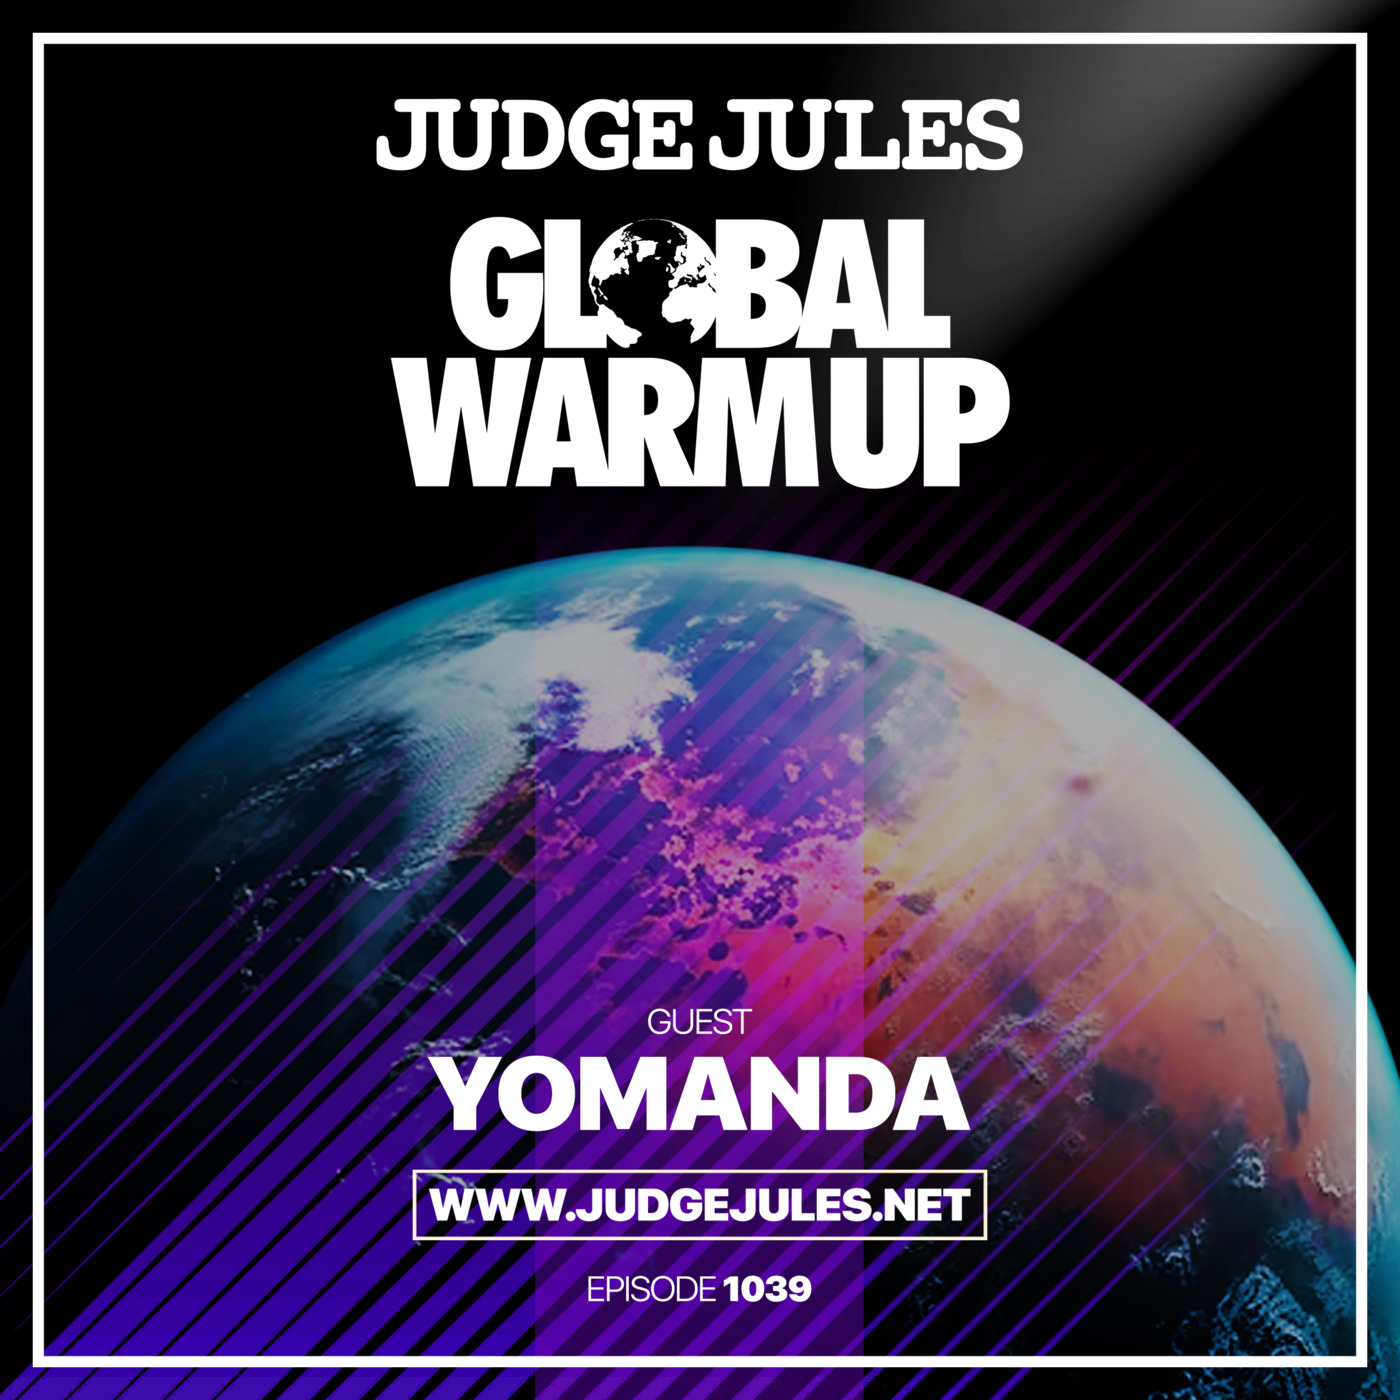 Episode 1039: JUDGE JULES PRESENTS THE GLOBAL WARM UP EPISODE 1039